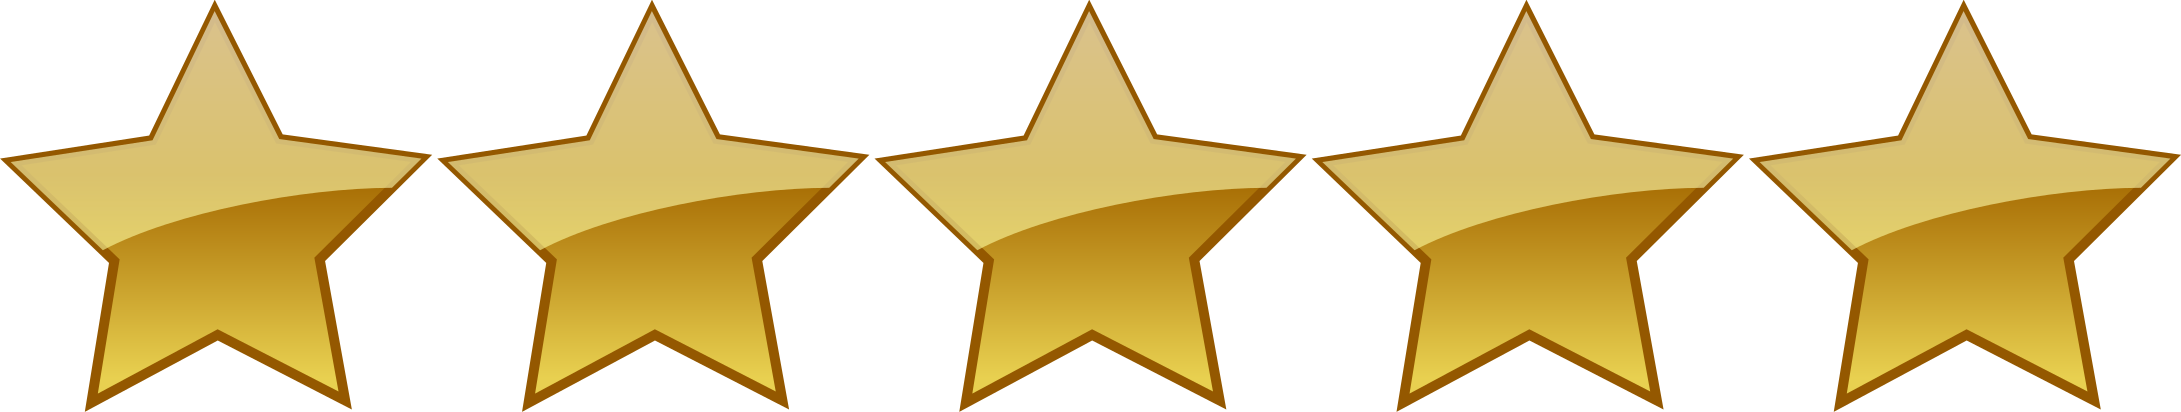 Rating - 5 Stars